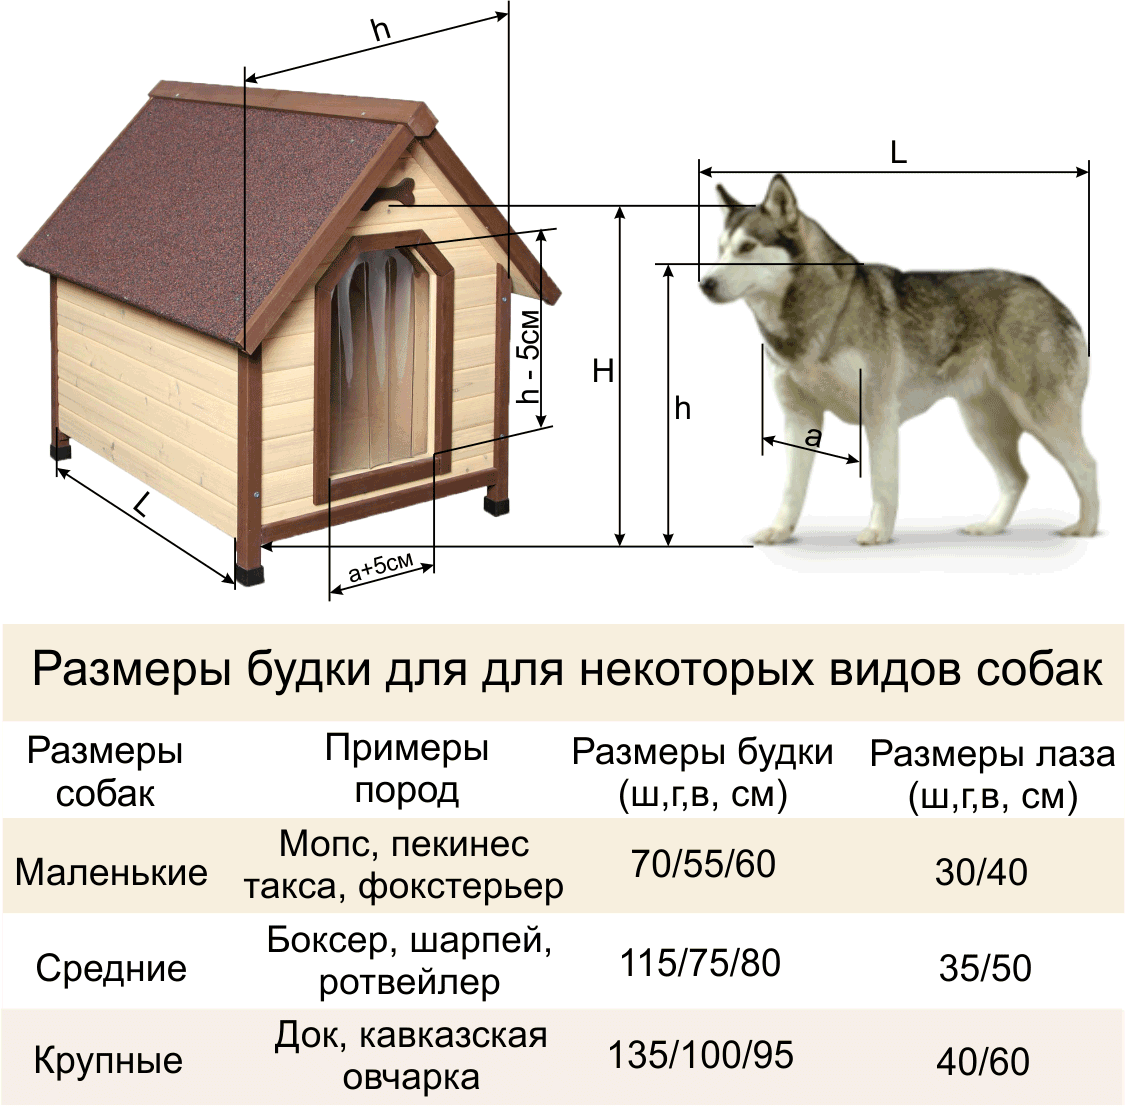 Как построить теплую будку для собаки на зиму | Worx – техника для дома и сада | Дзен